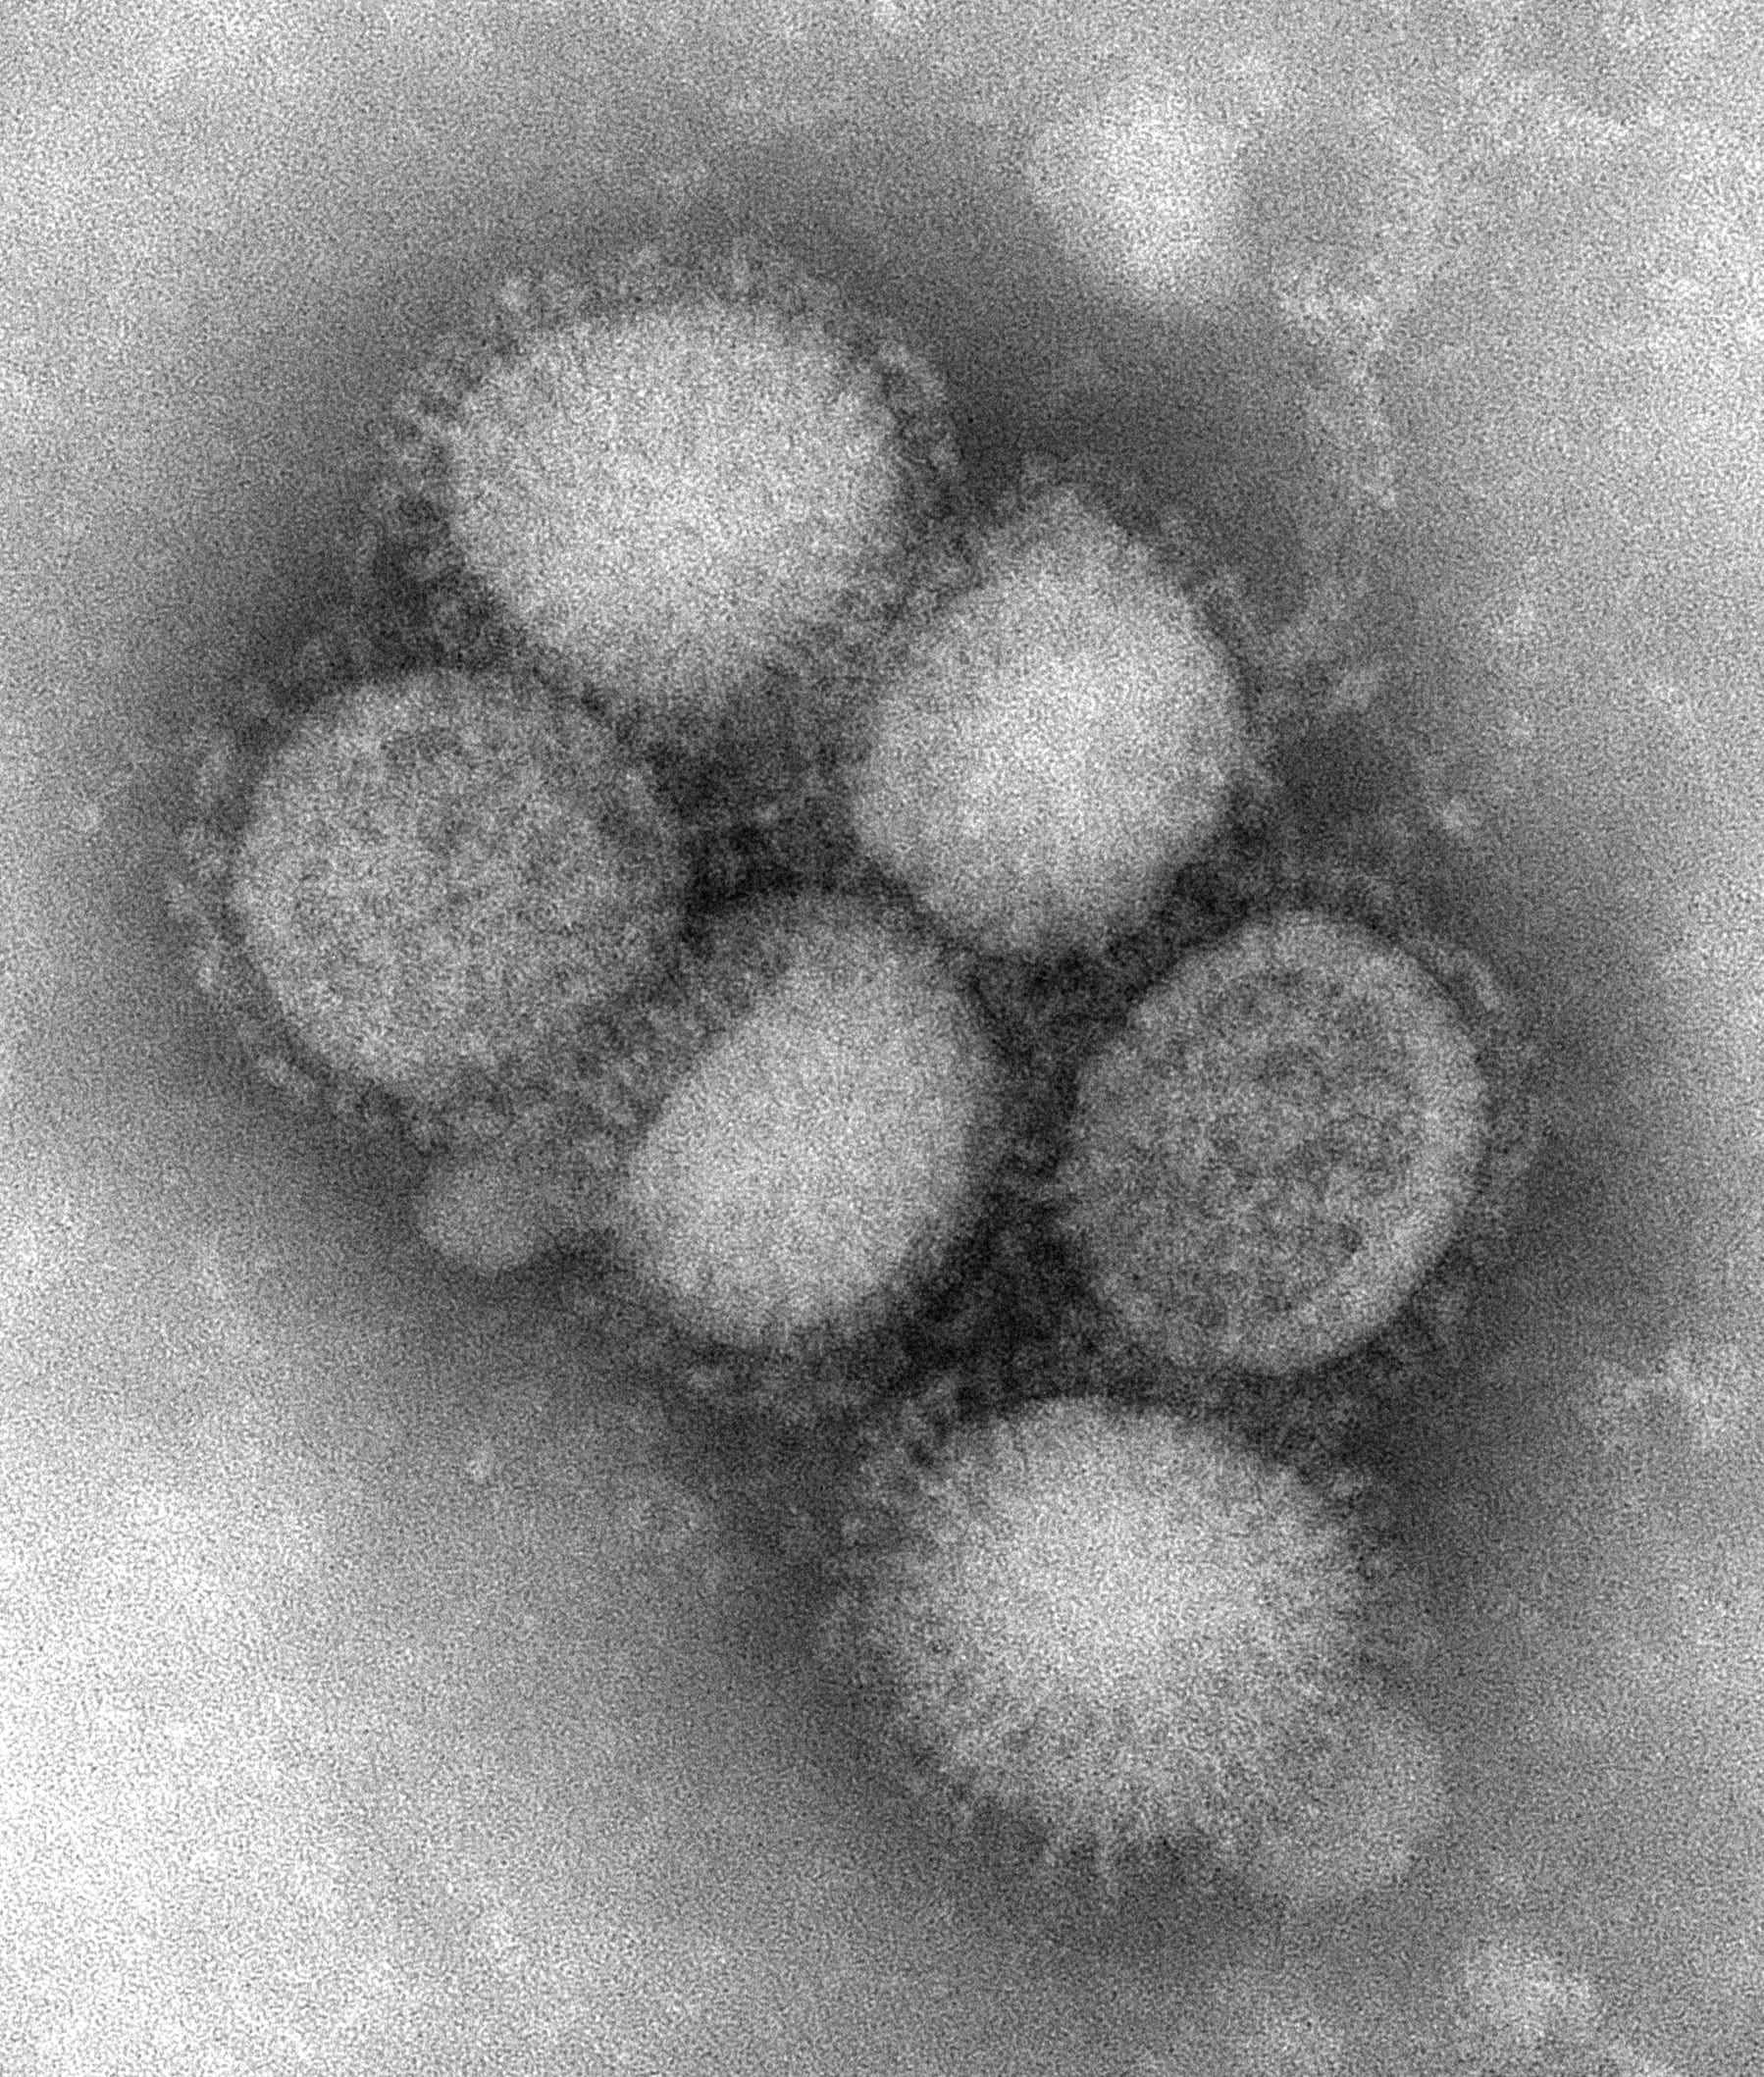 CDC H1N1 Flu Images of the H1N1 Influenza Virus